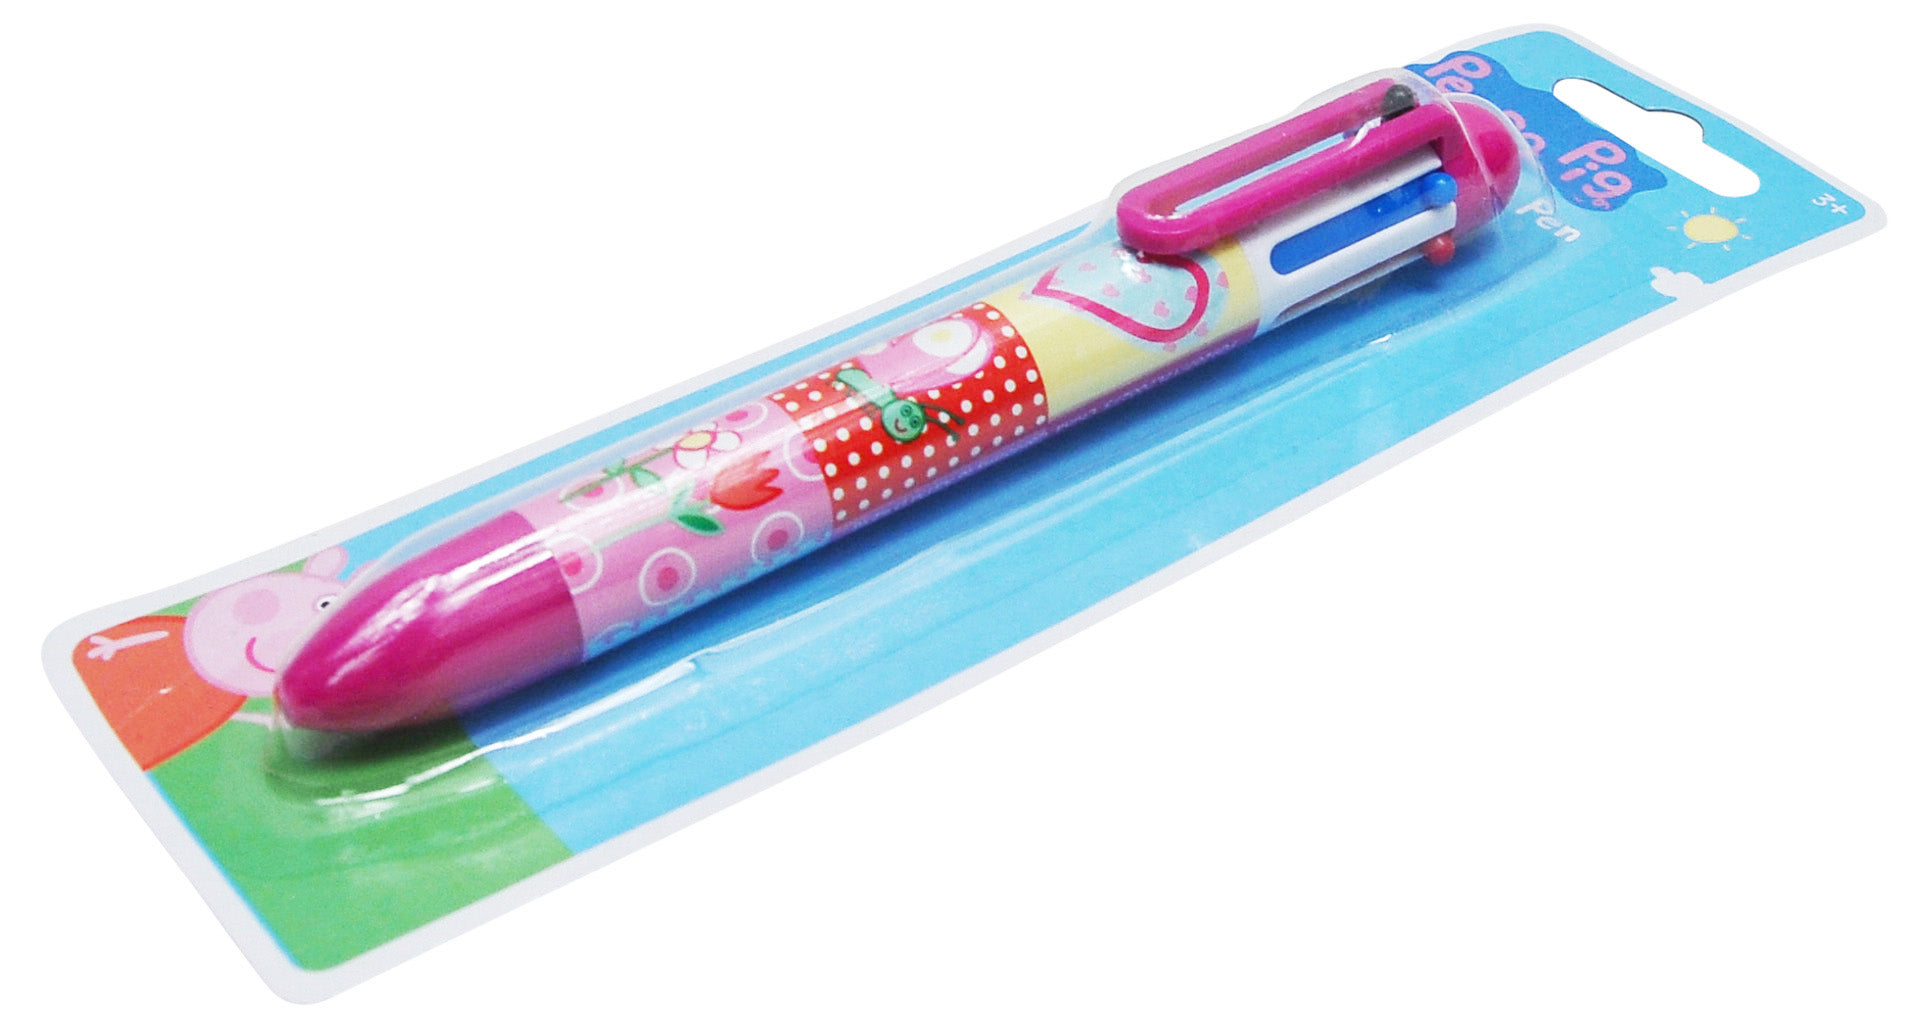 Peppa Pig Children's Ballpoint Retractable Pen 6-Colors 2-Pack